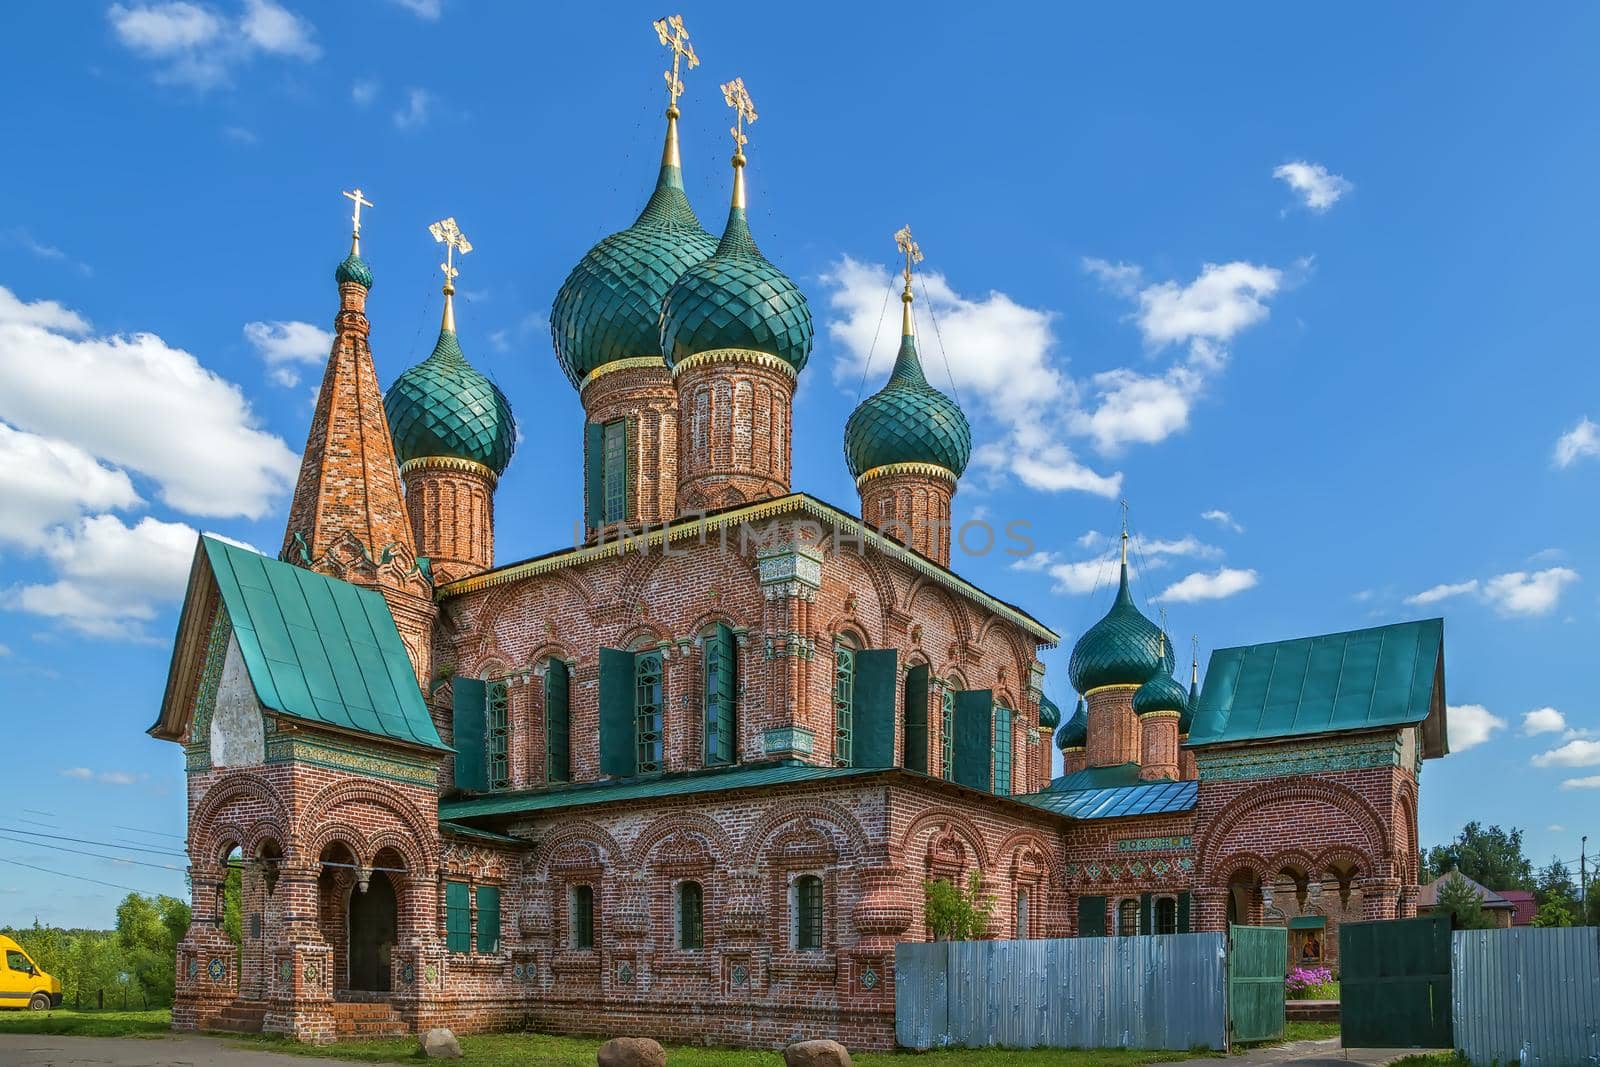 Temple ensemble in Korovniki, Yaroslavl, Russia by borisb17